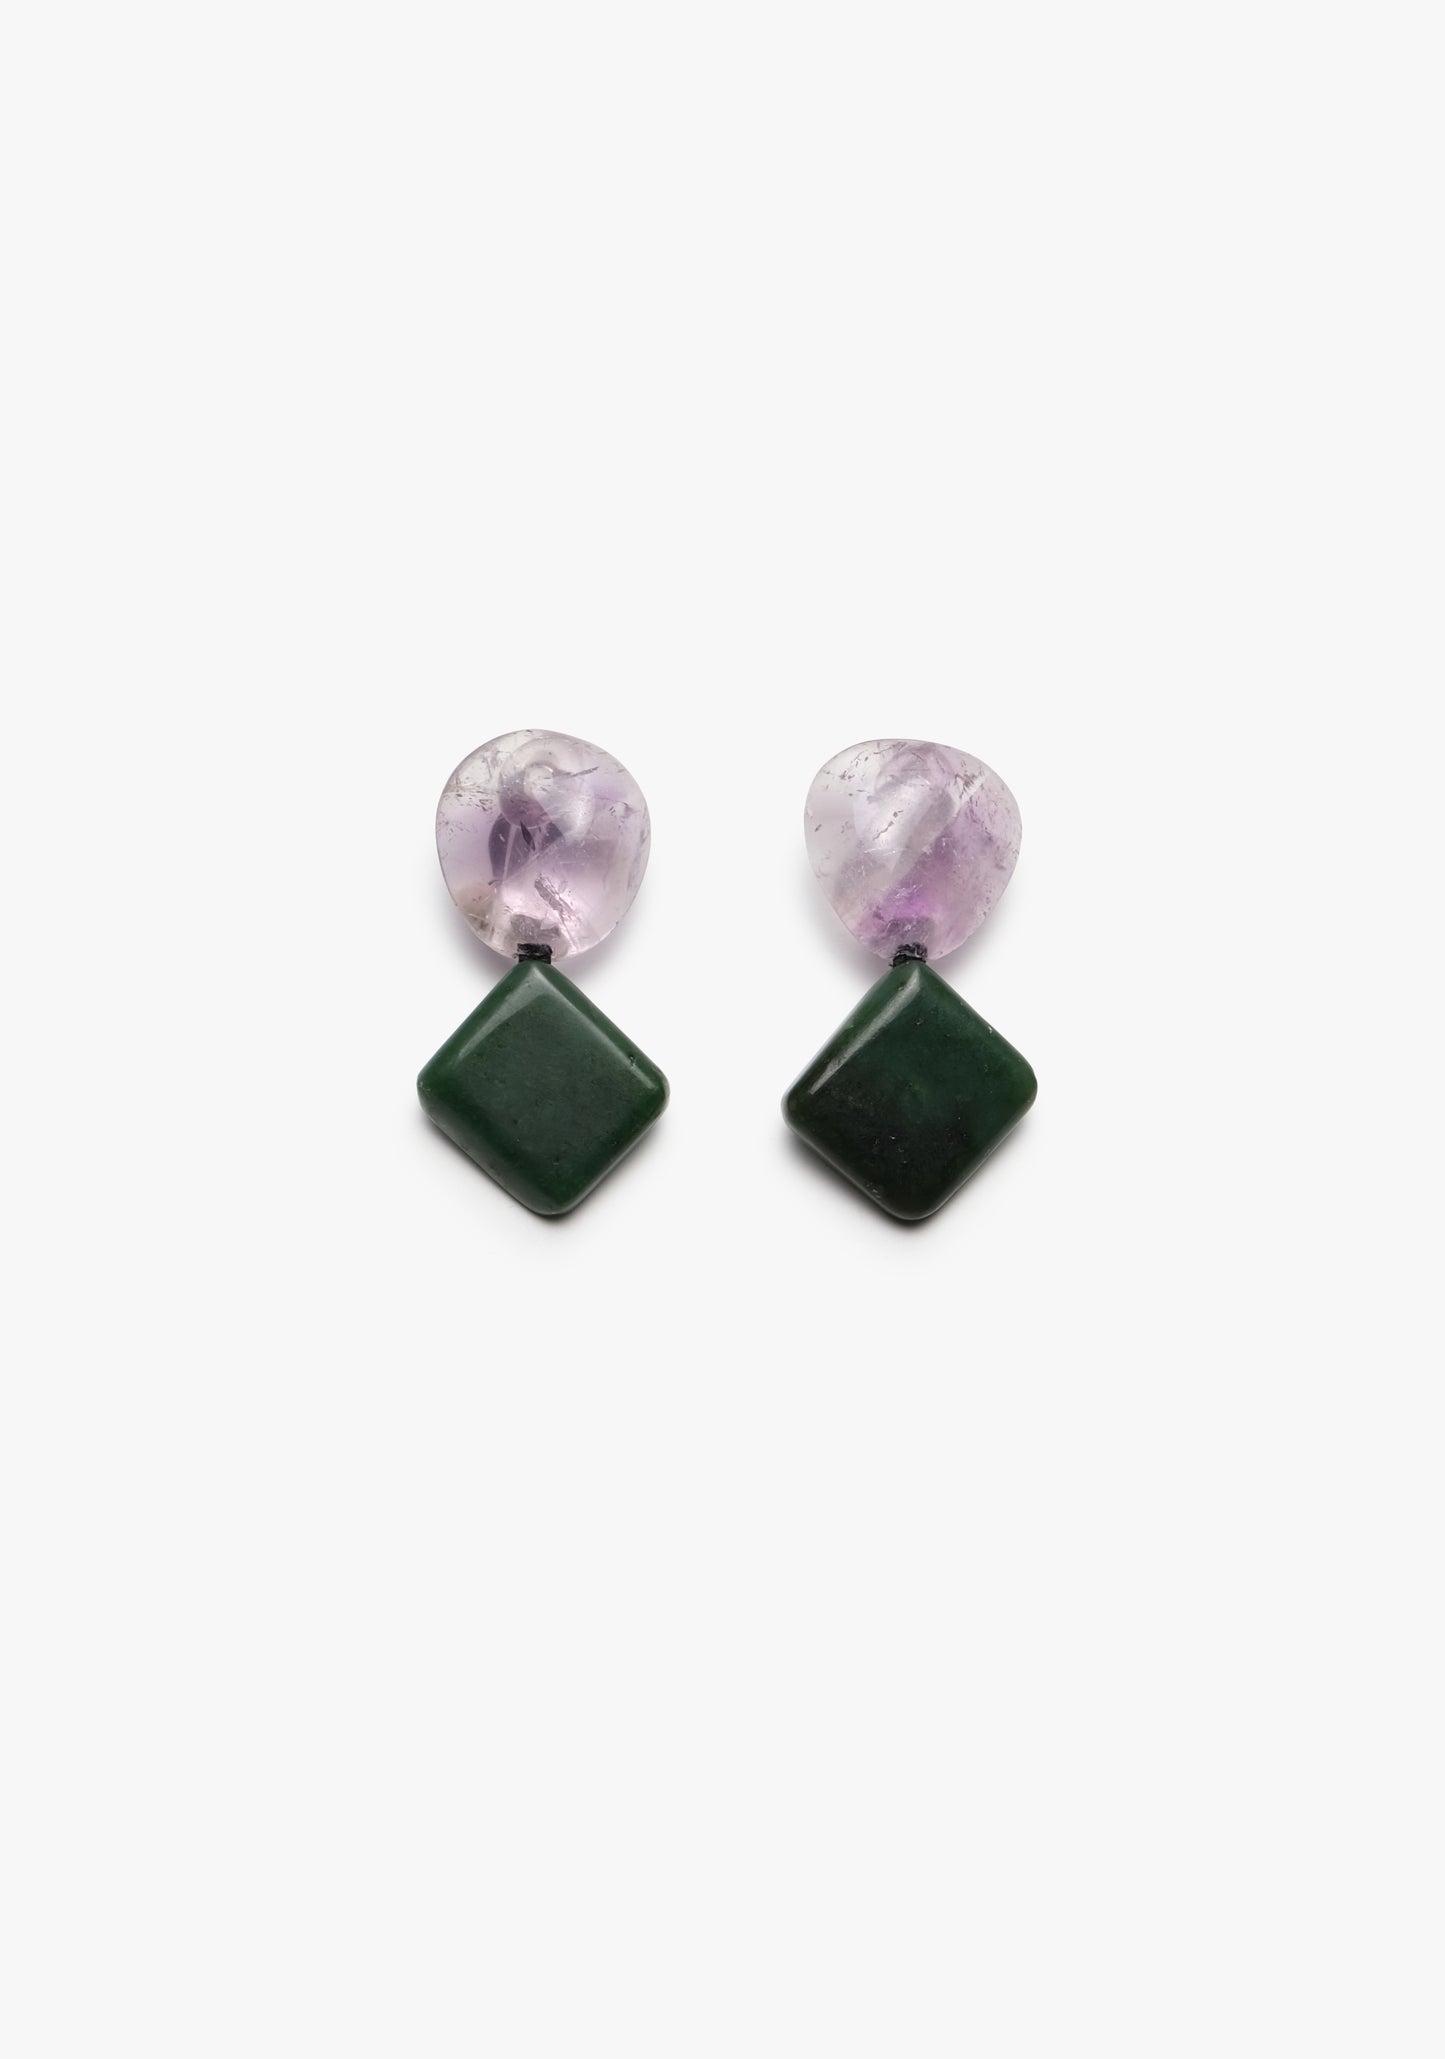 Earring: amethyst and jade